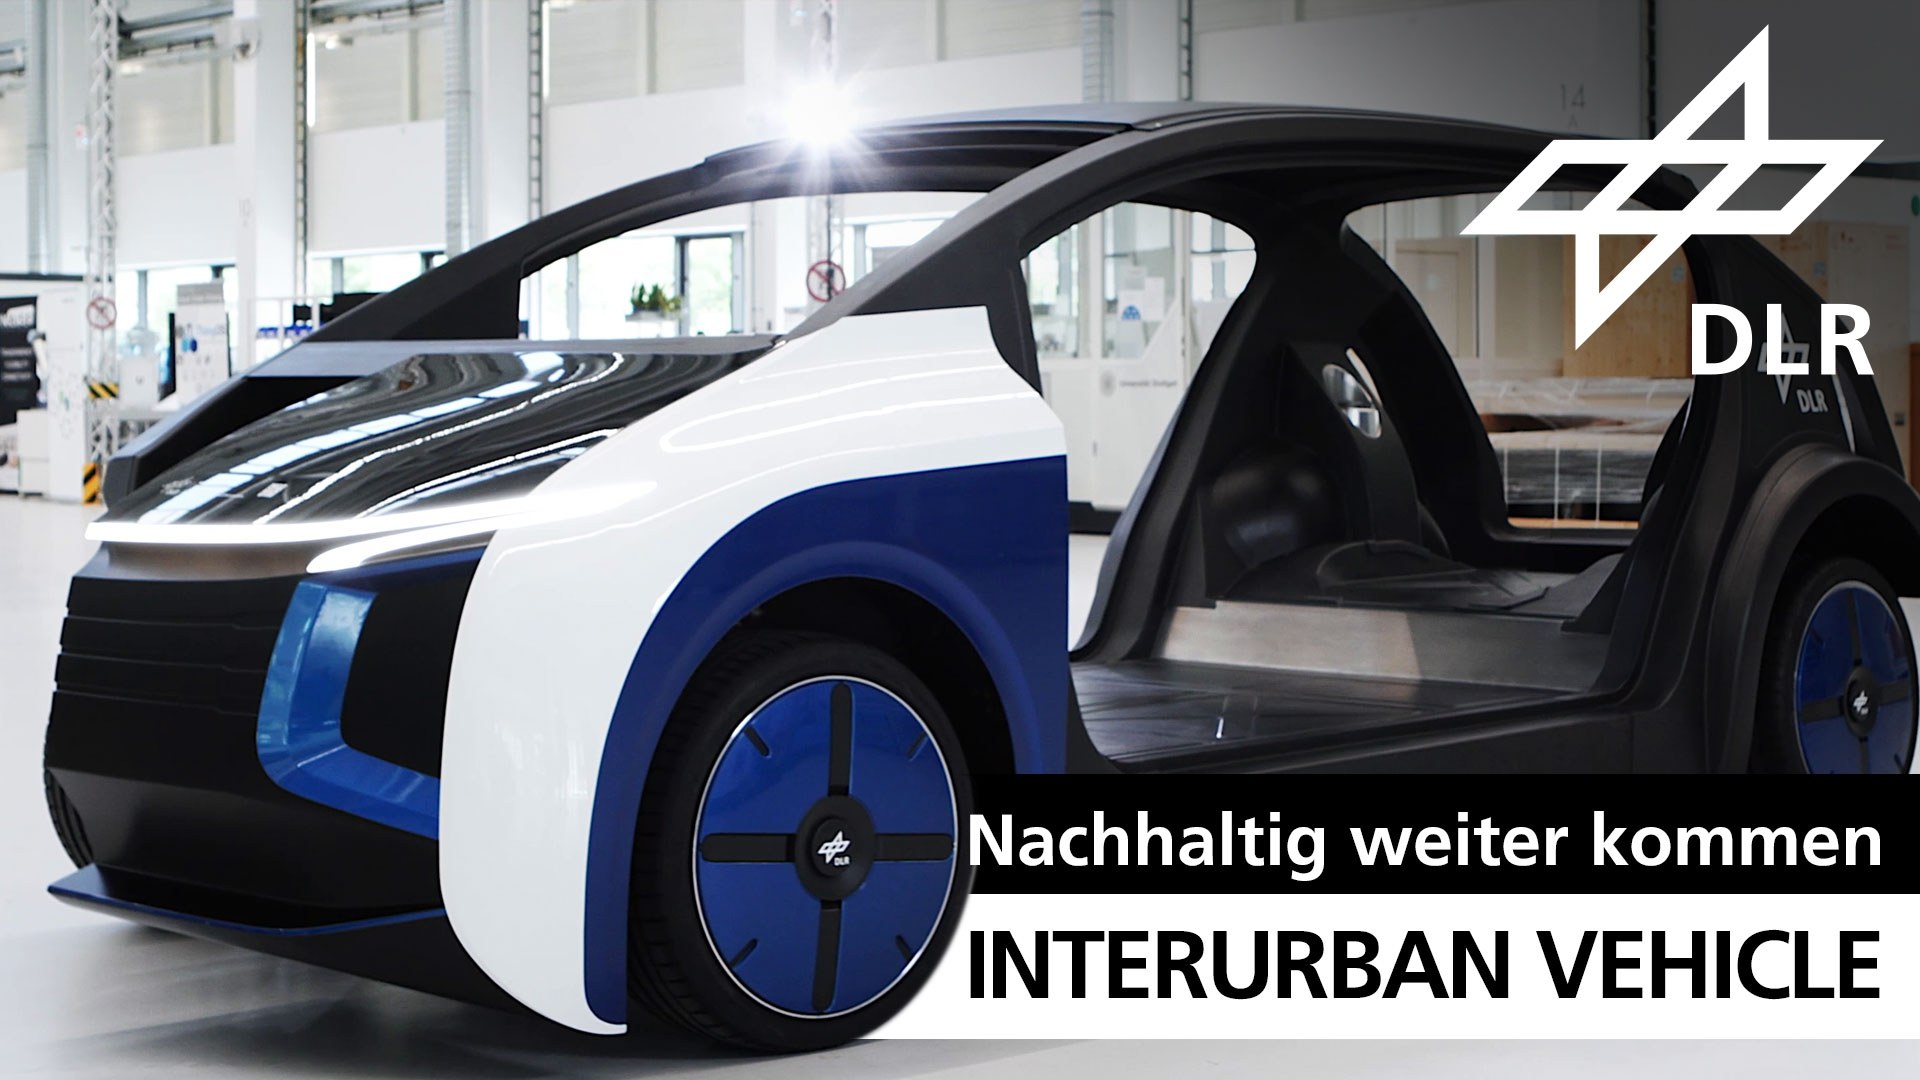 Video still: Interurban Vehicle – Moving forward sustainably